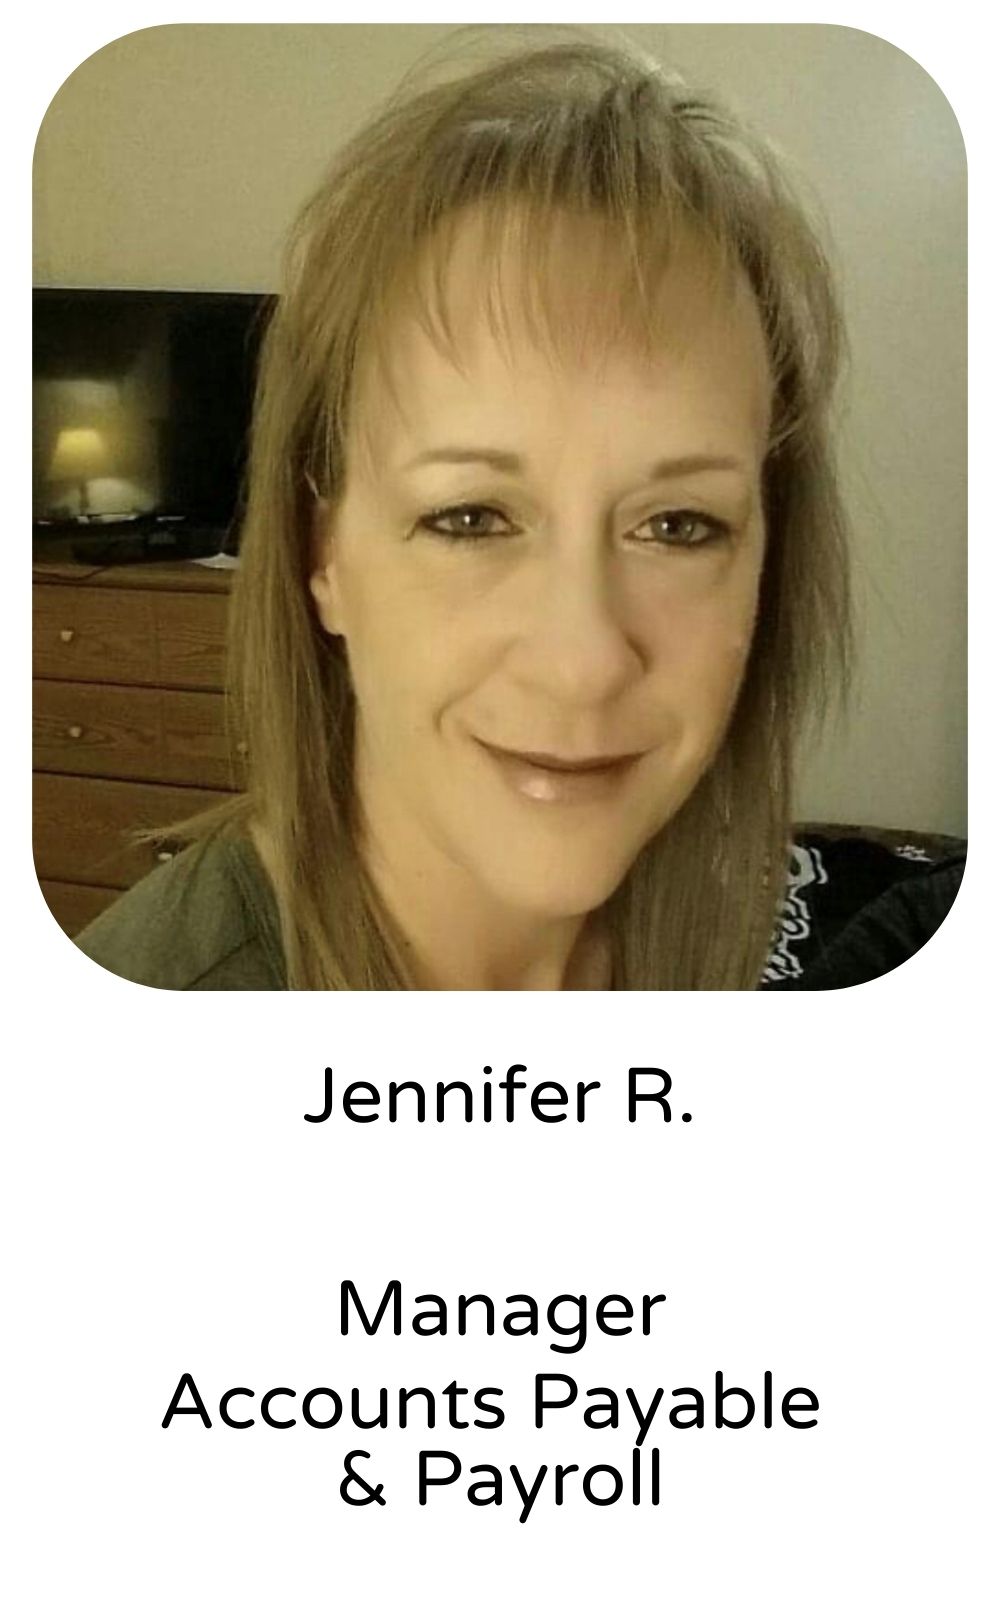 Jennifer R, Manager, Account Payable & Payroll